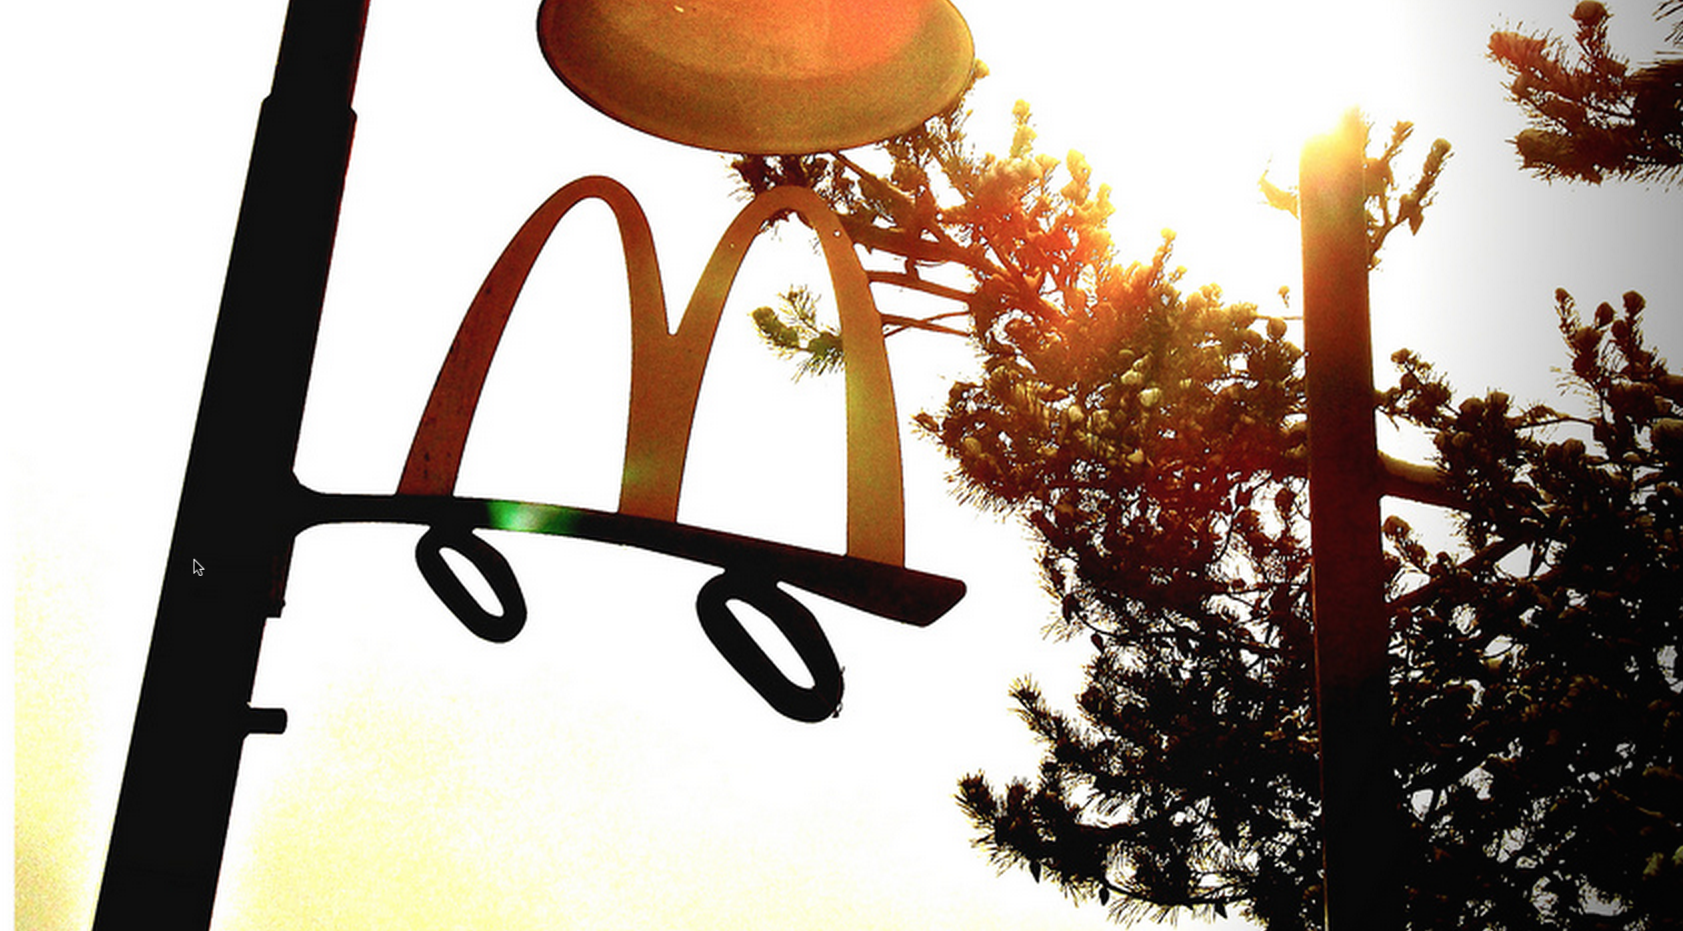 McDonald’s CEO Says He Has Turnaround Ideas Up His Sleeve